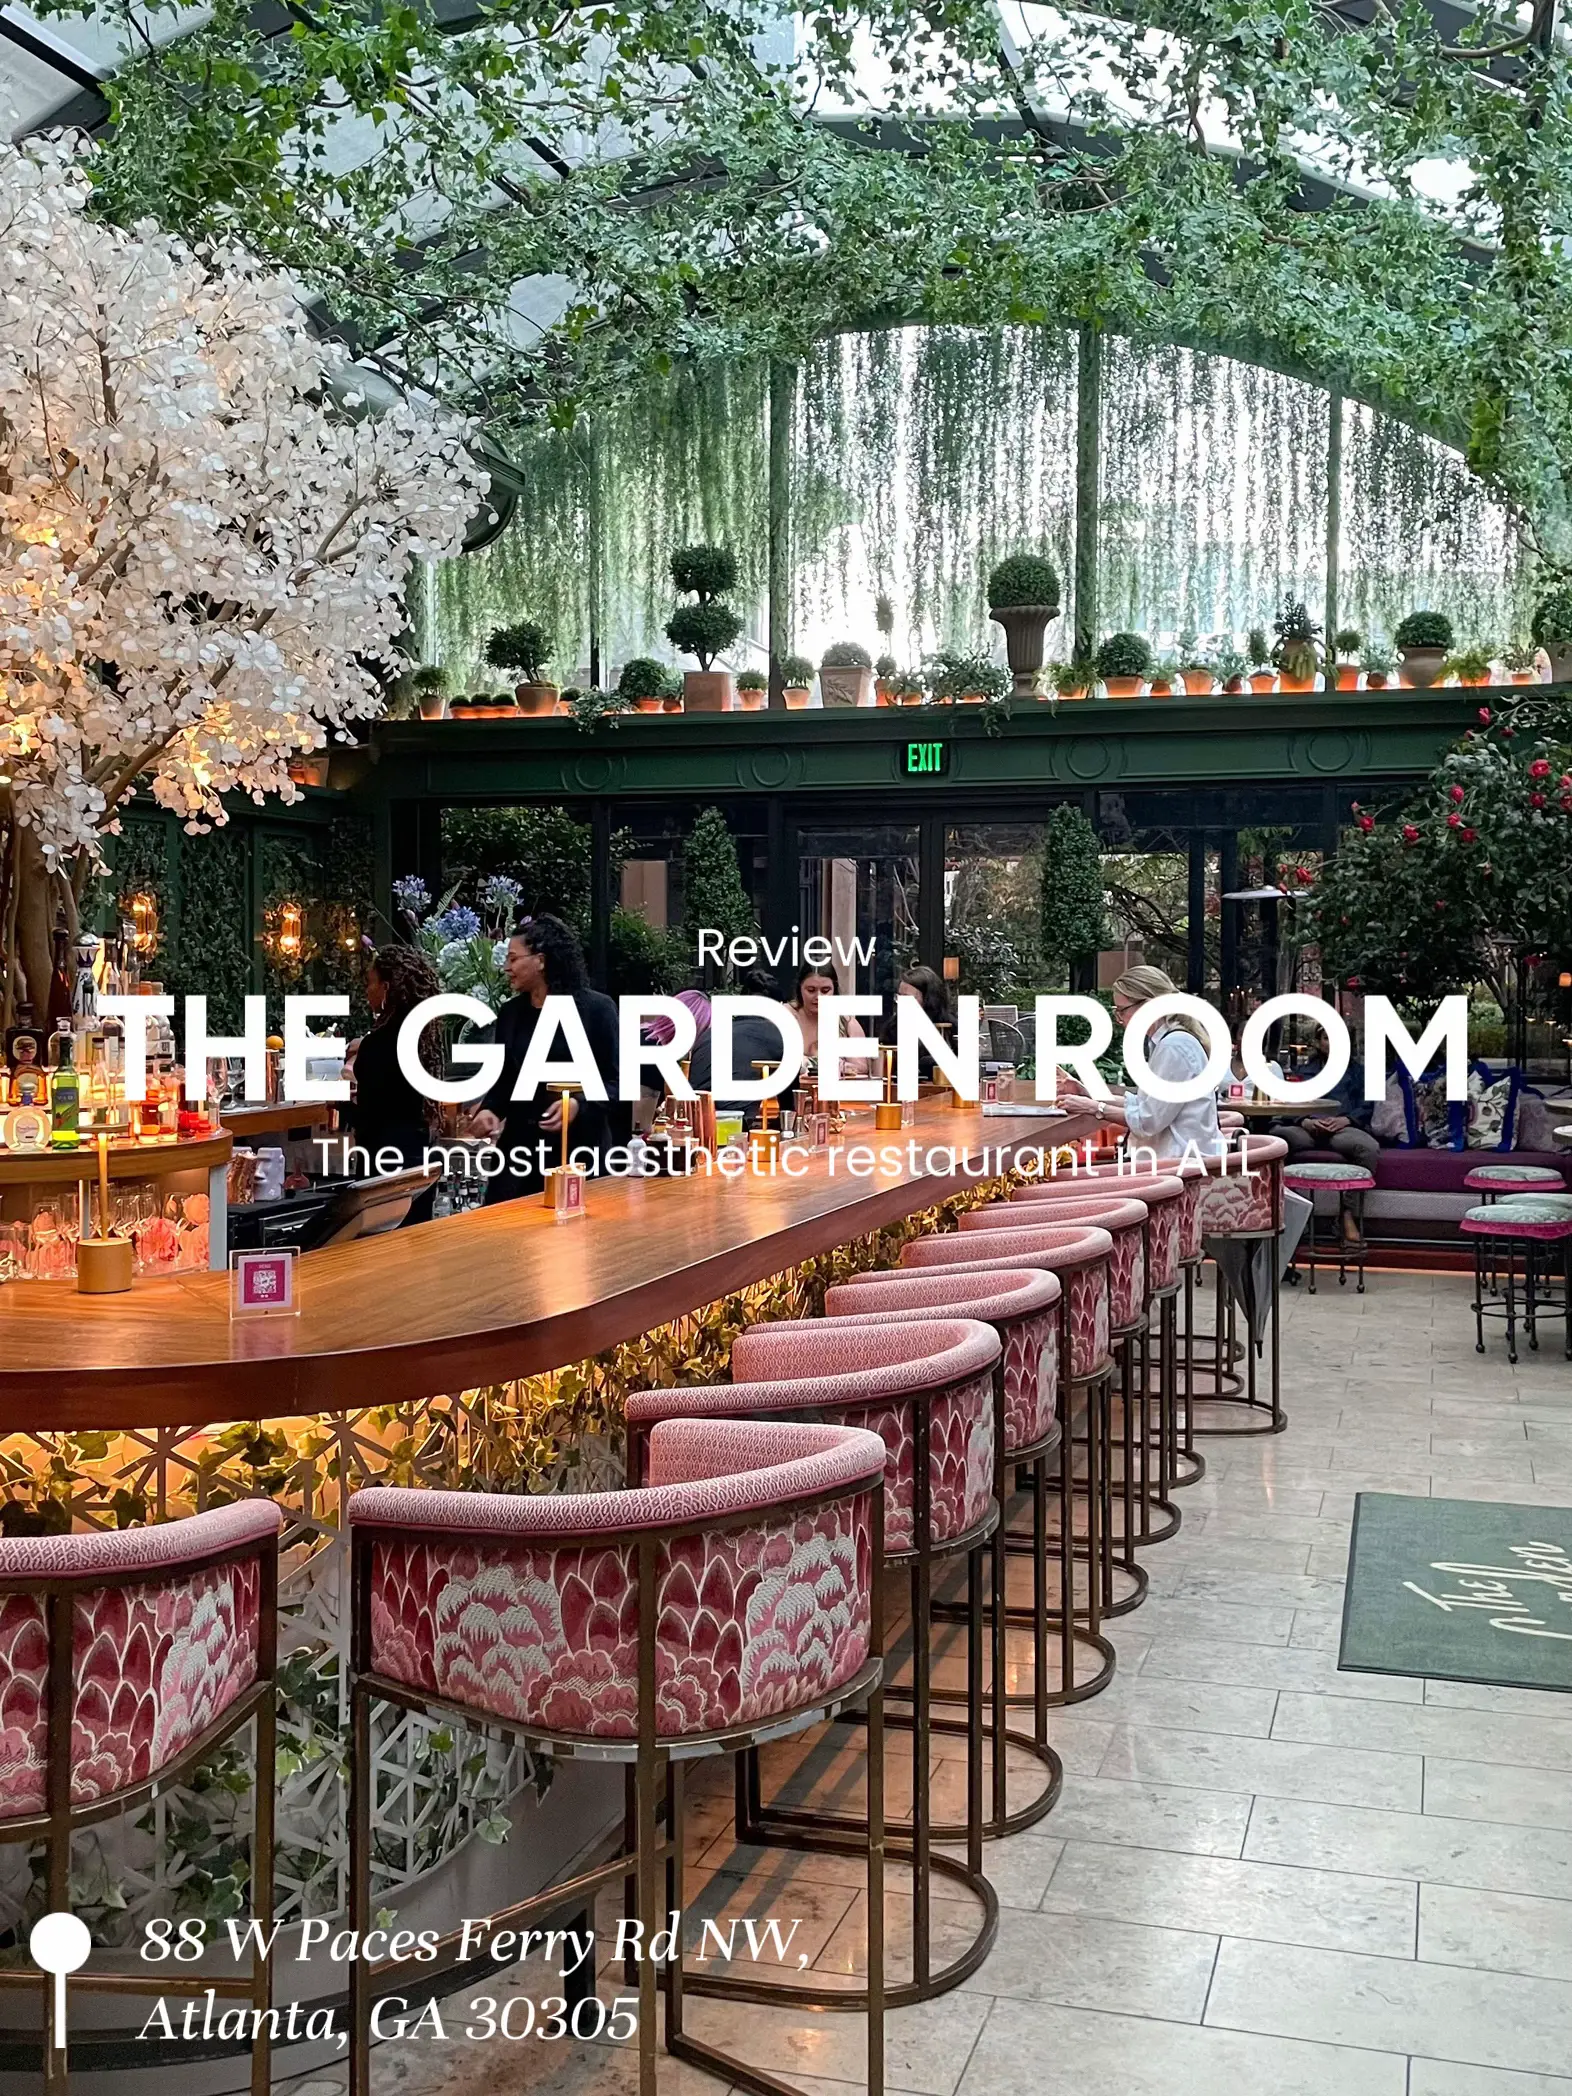  A restaurant with a garden room and a bar.